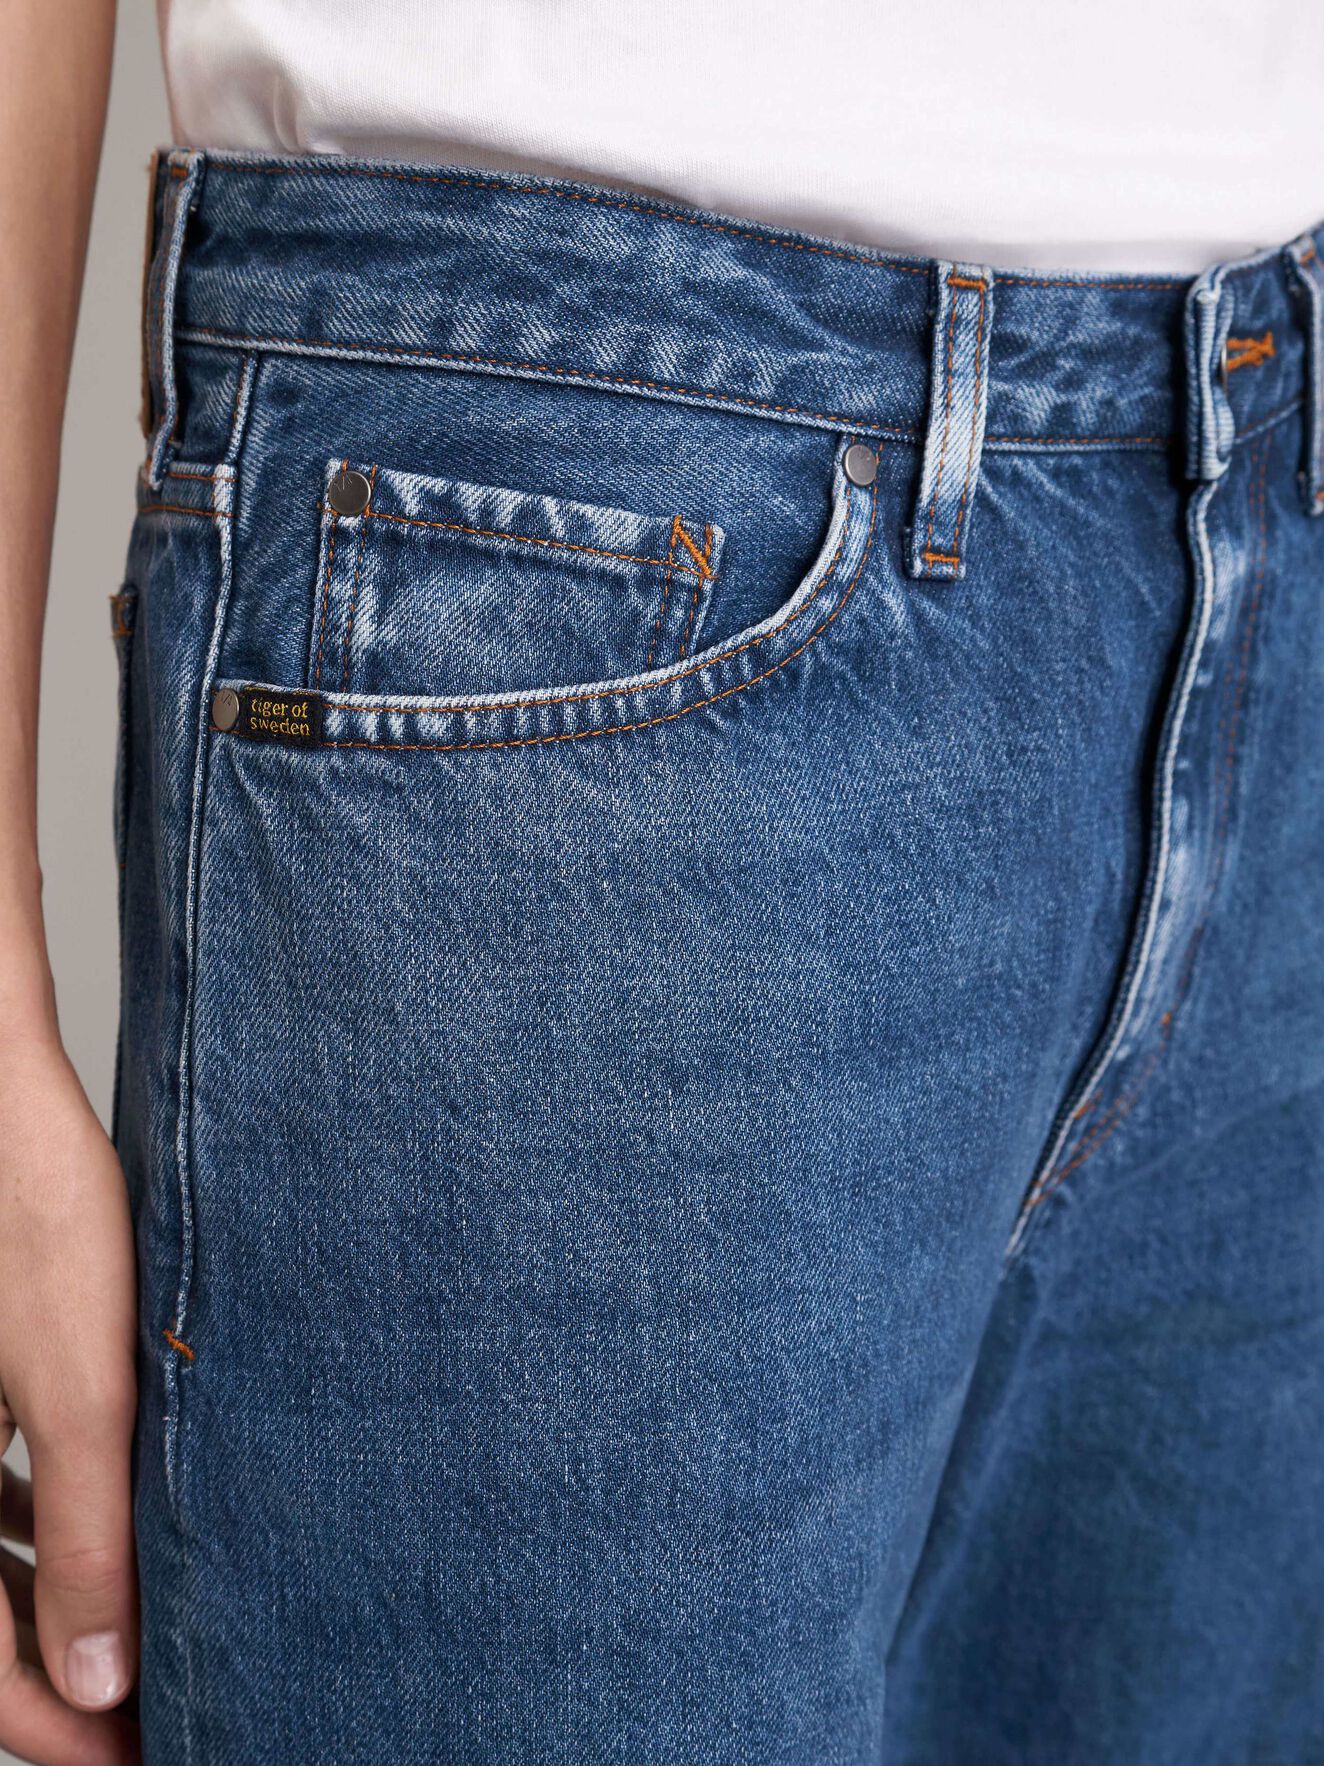 Lore Jeans - Köp Jeans online